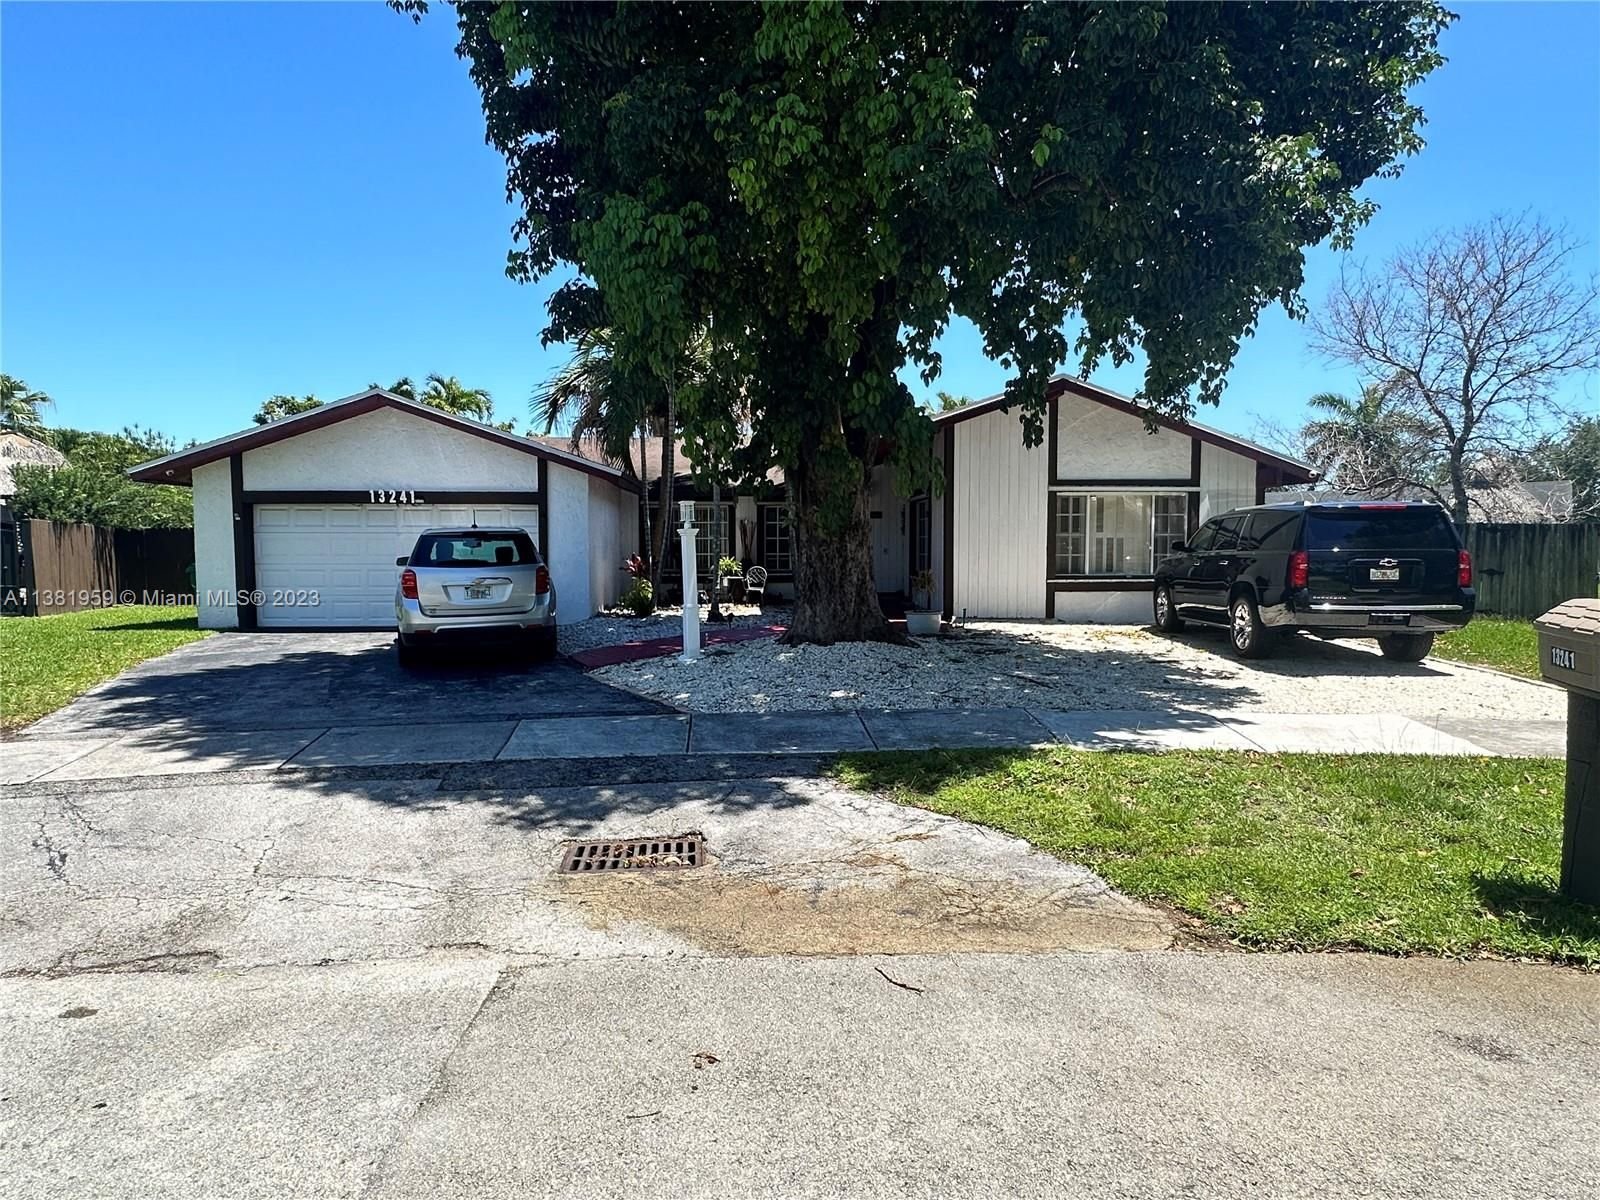 Real estate property located at 13241 100th Ter, Miami-Dade County, Miami, FL